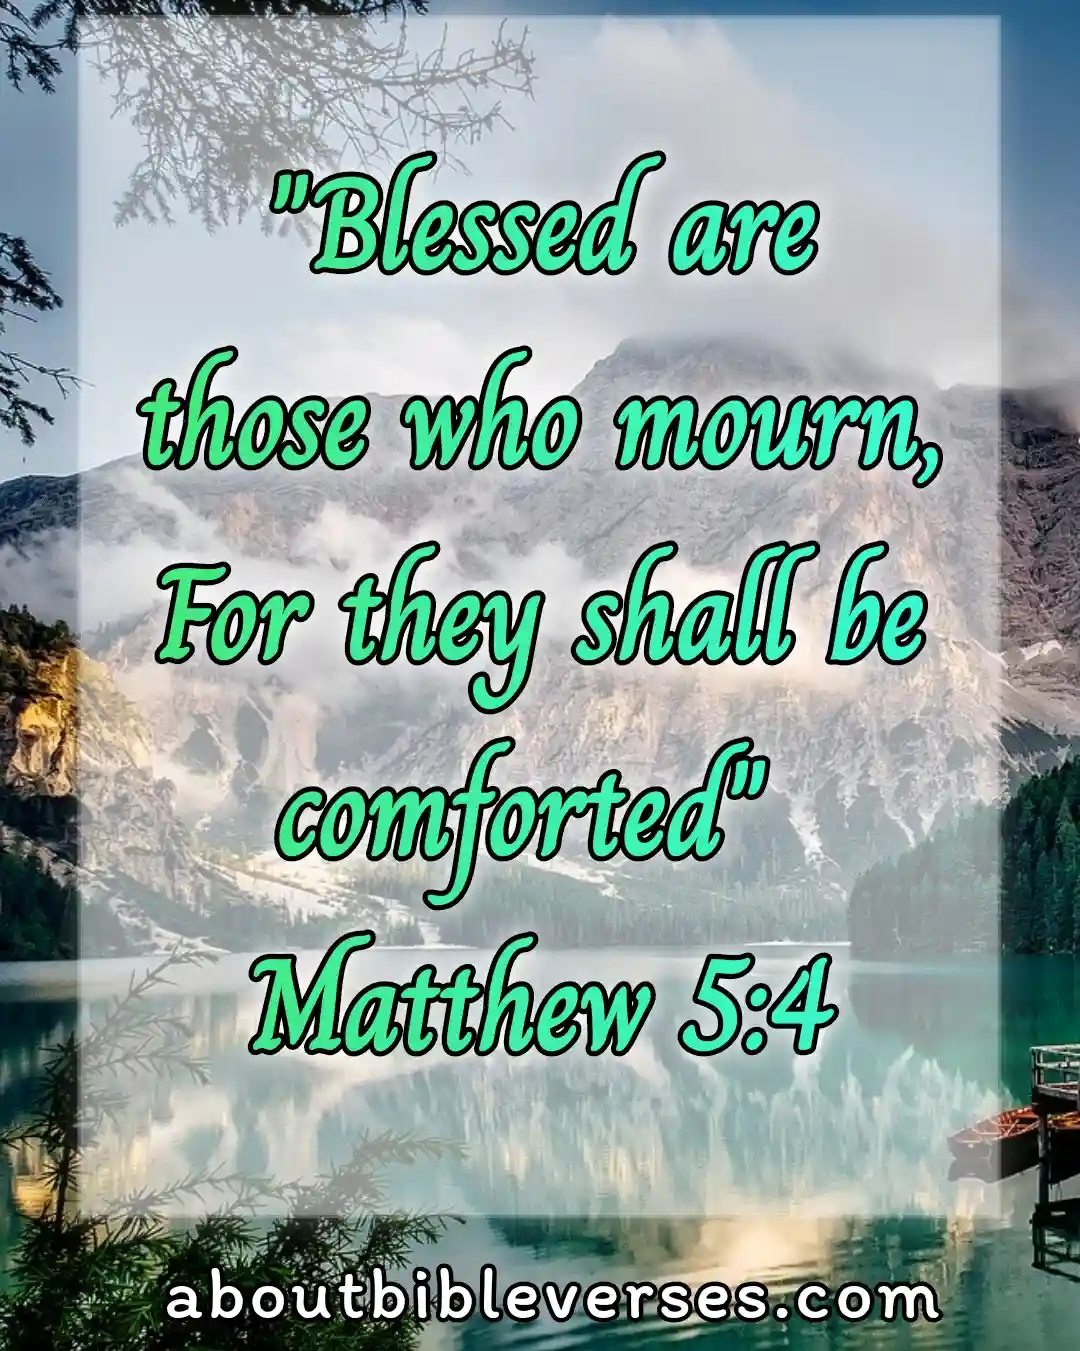 Today bible verse (Matthew 5:4)